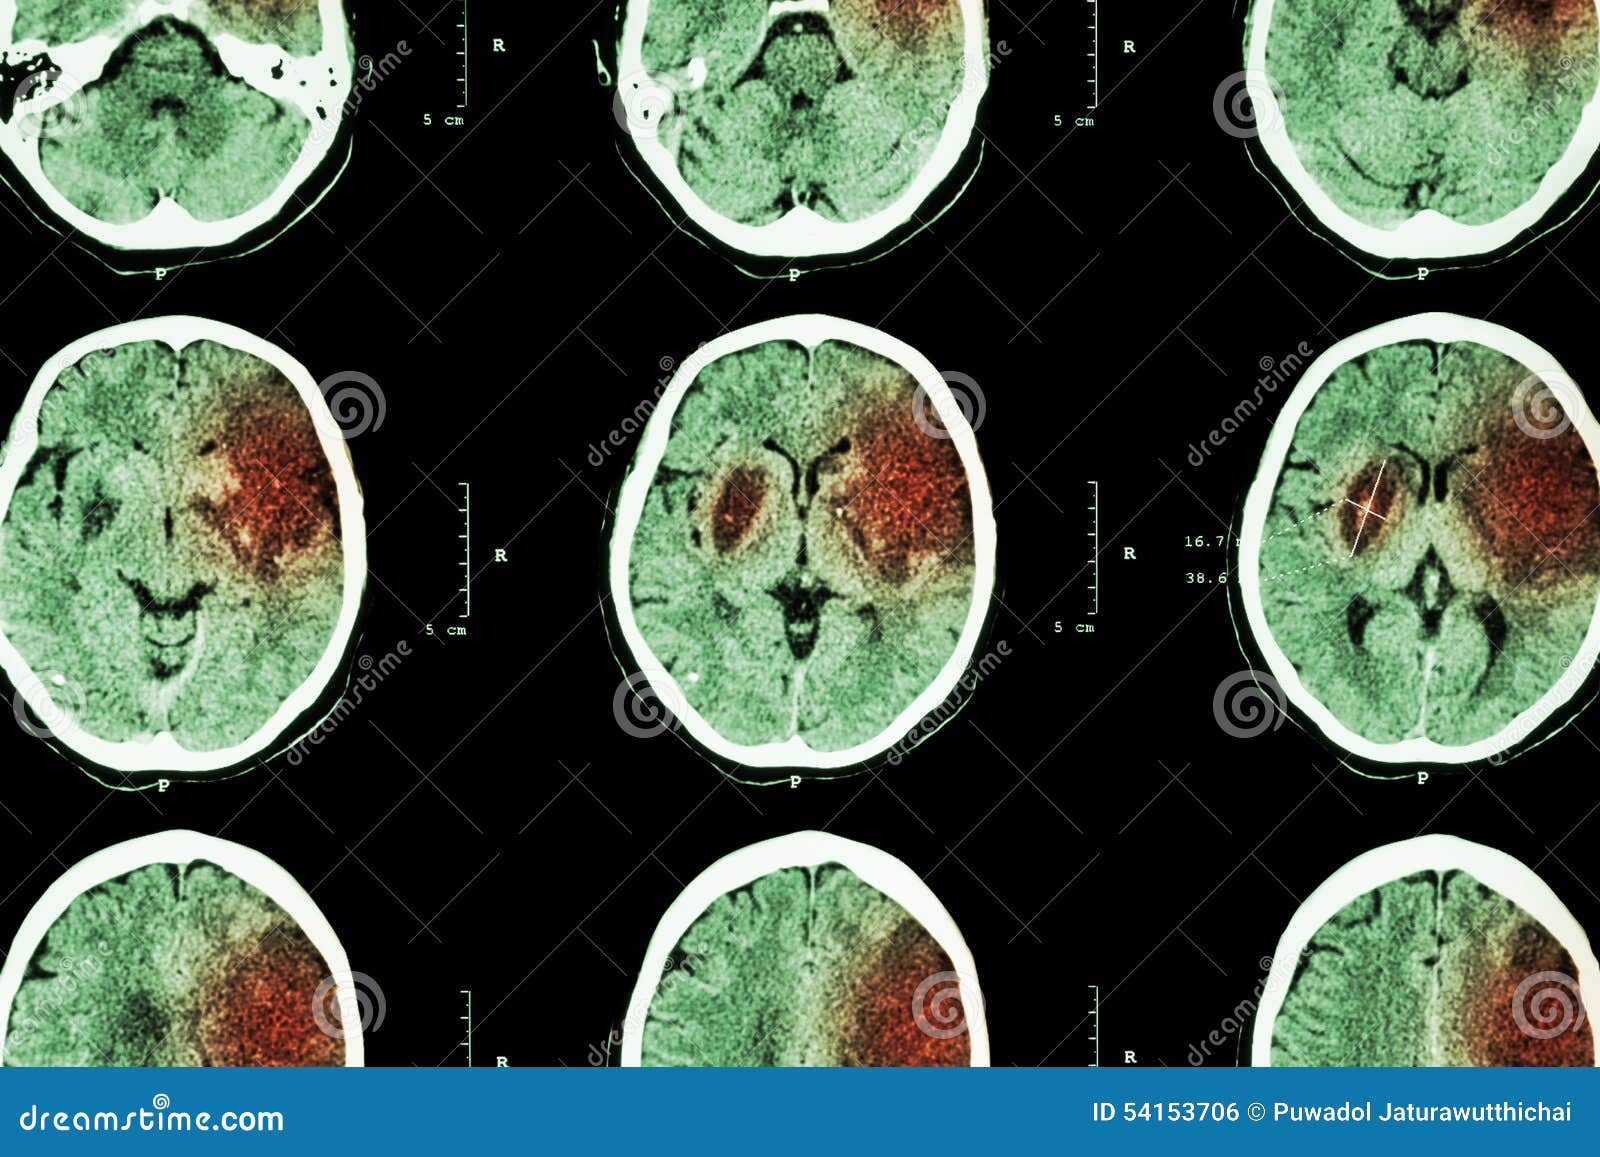 ischemic stroke : ( ct of brain show cerebral infarction at left frontal - temporal - parietal lobe ) ( nervous system background